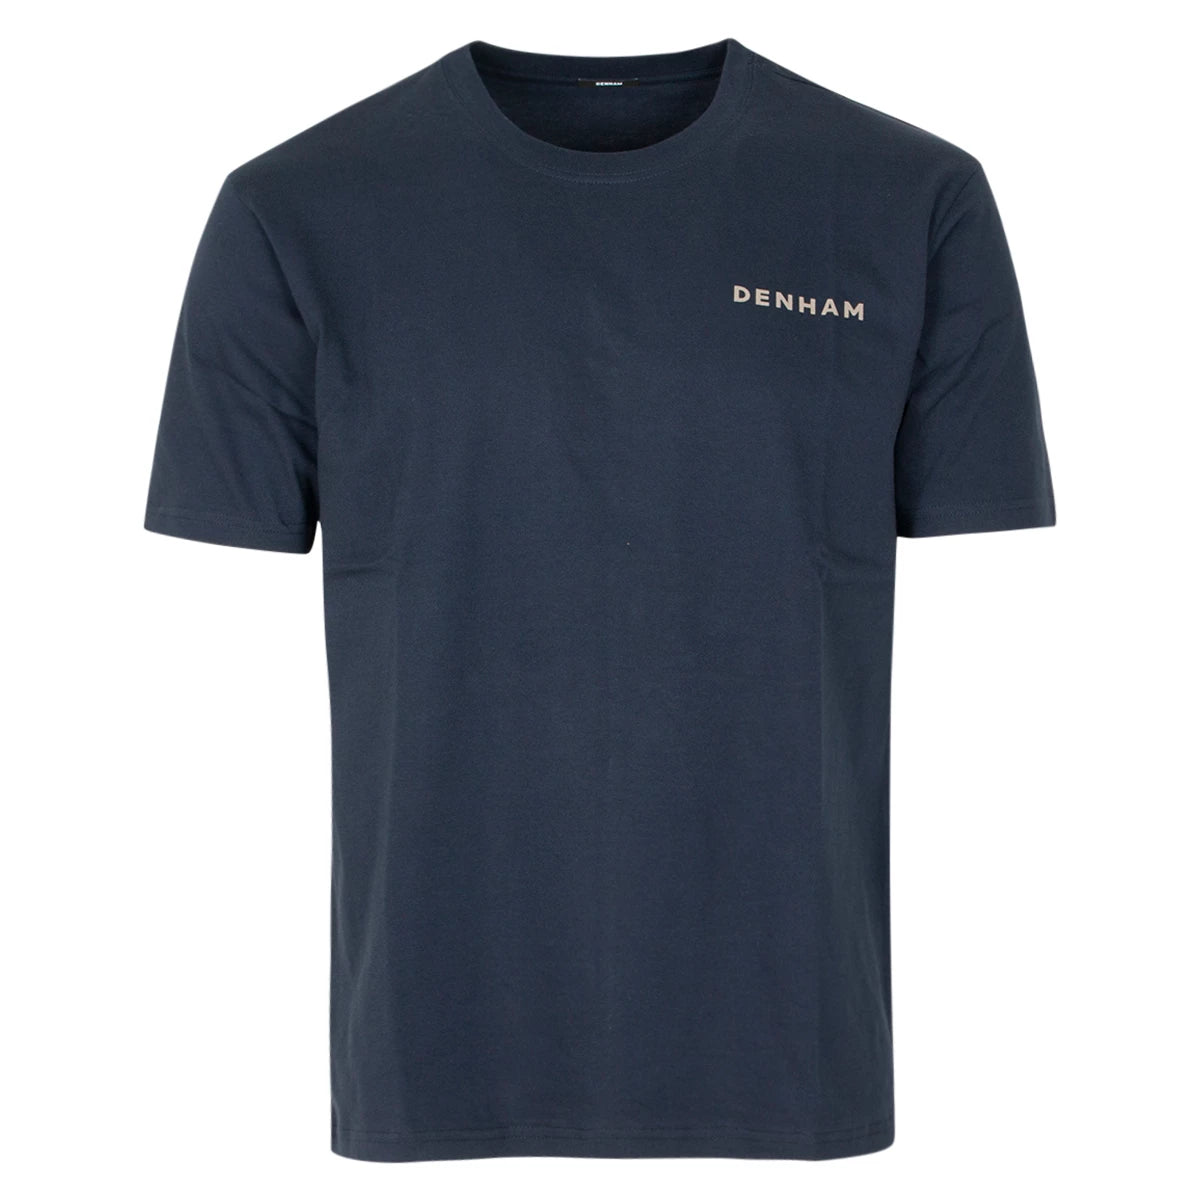 Denham T-shirt donkerblauw | Motif Regular tee